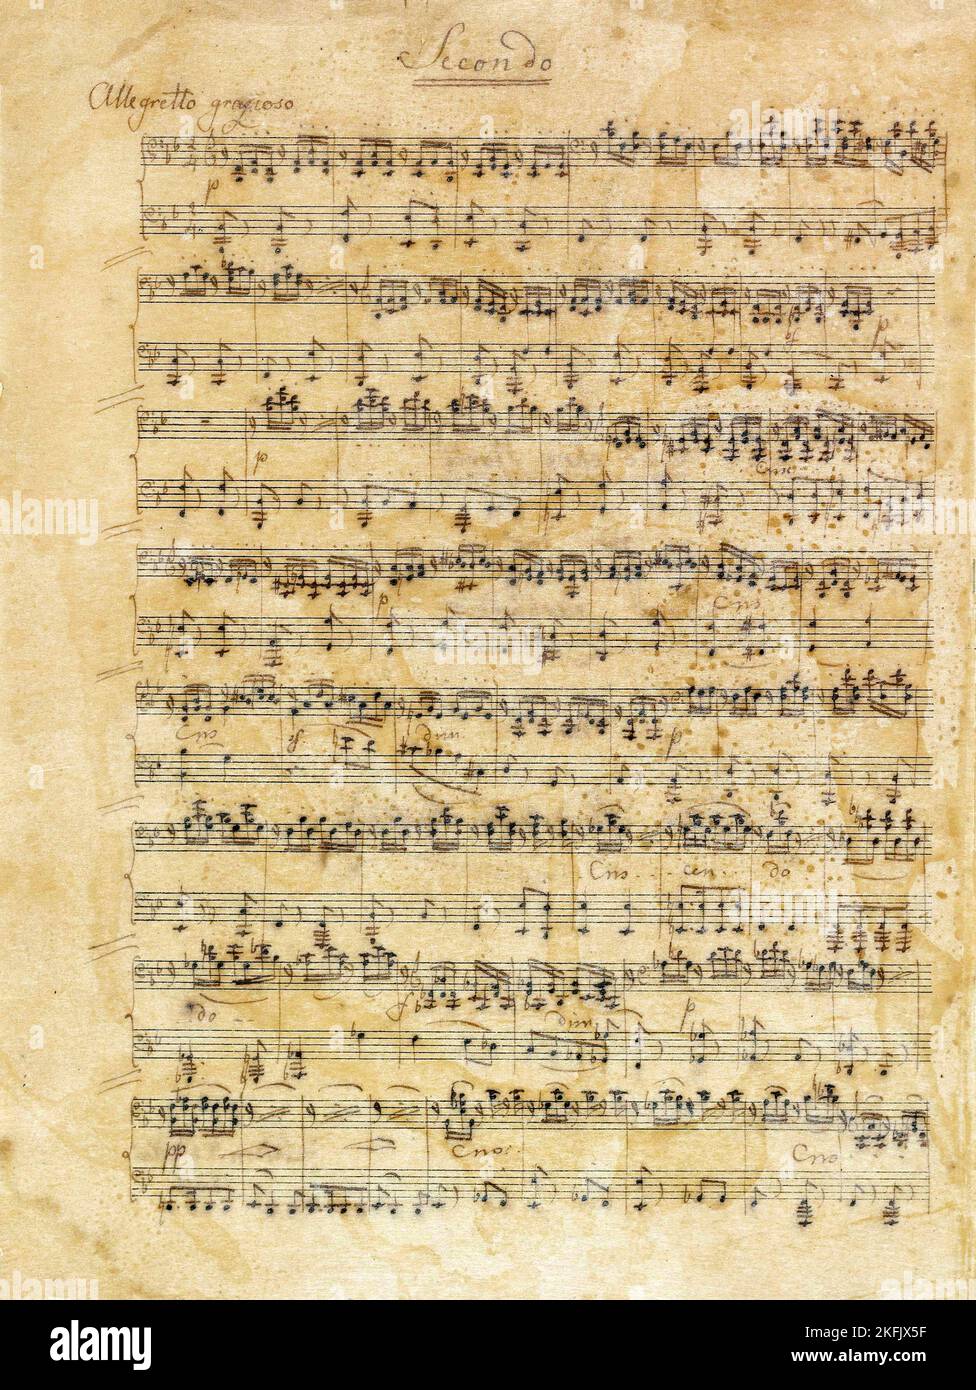 Felix Mendelssohn-Bartholdy; Song without words for Piano four Hands; 1847; manuscrit de musique; Collection royale du Royaume-Uni. Banque D'Images